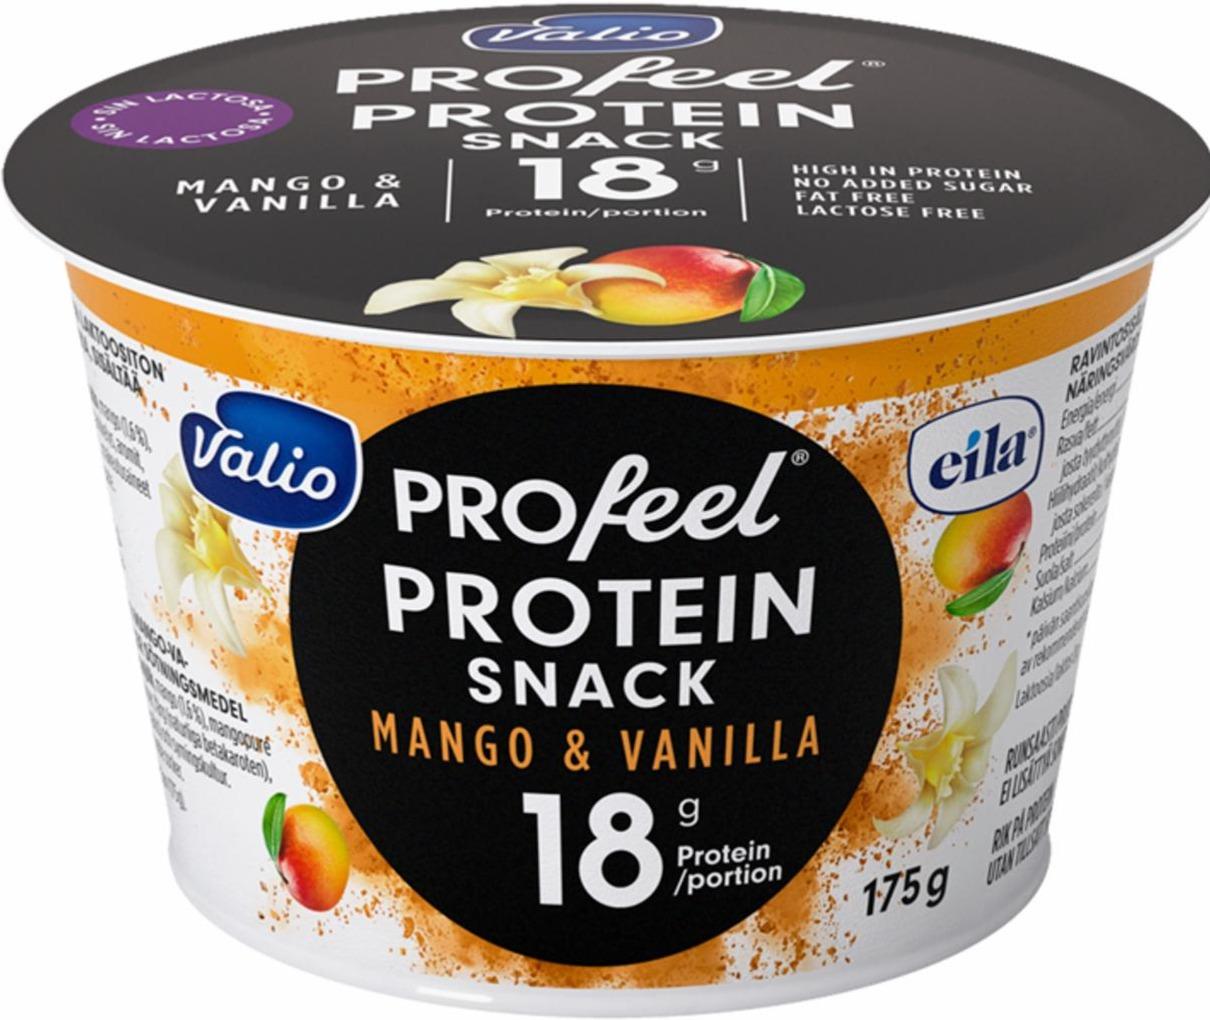 Zdjęcia - profeel protein snack mango vanilia Valio